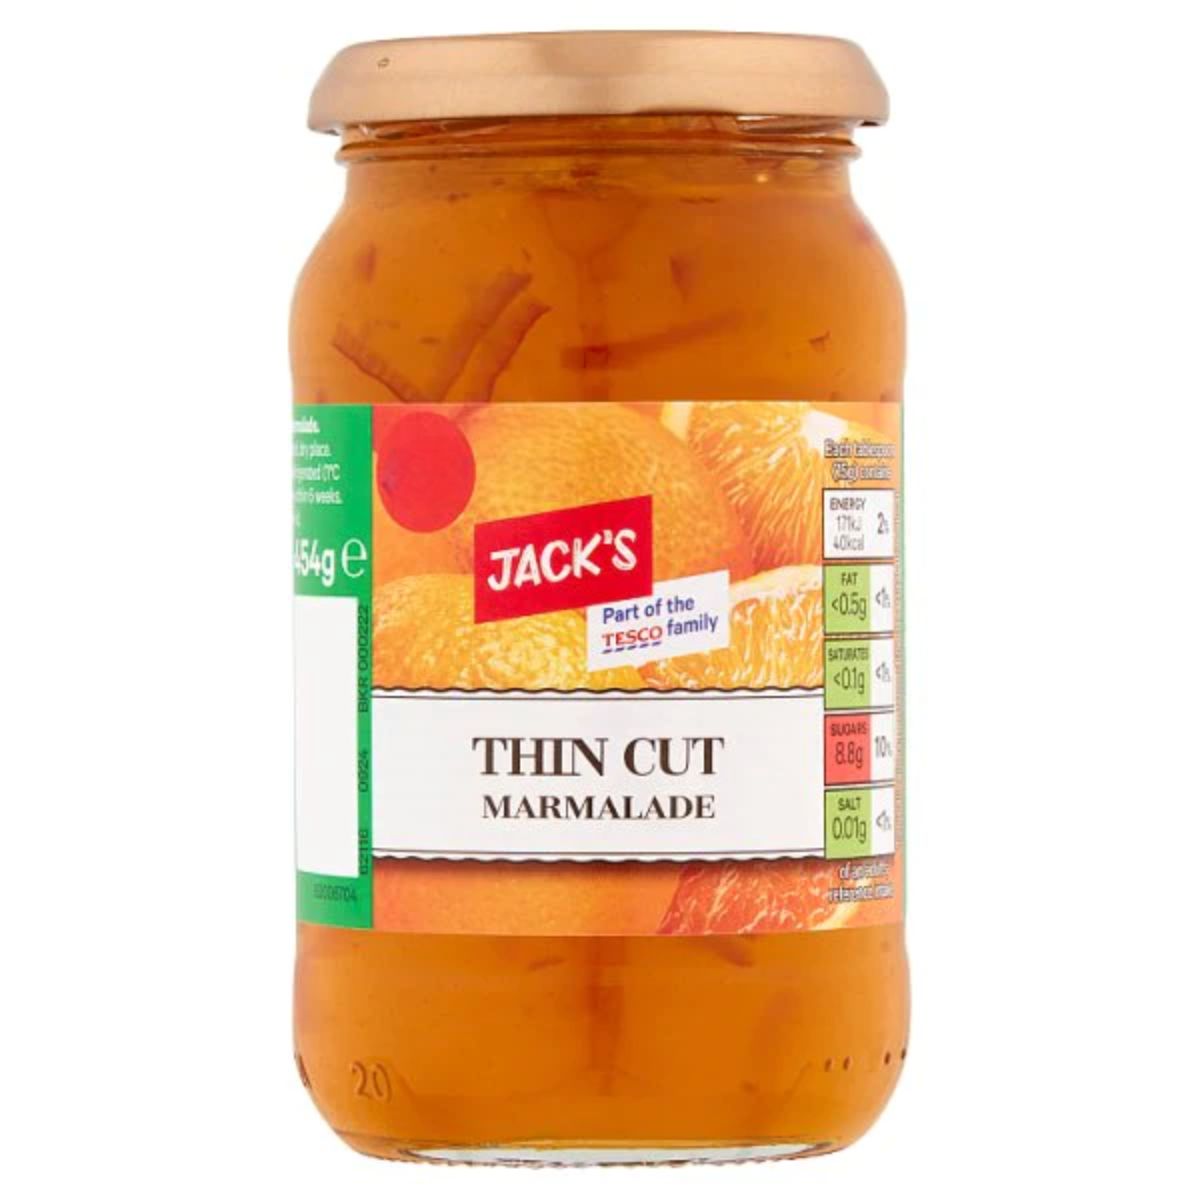 A jar of Jacks - Thin Cut Marmalade - 454g on a white background.